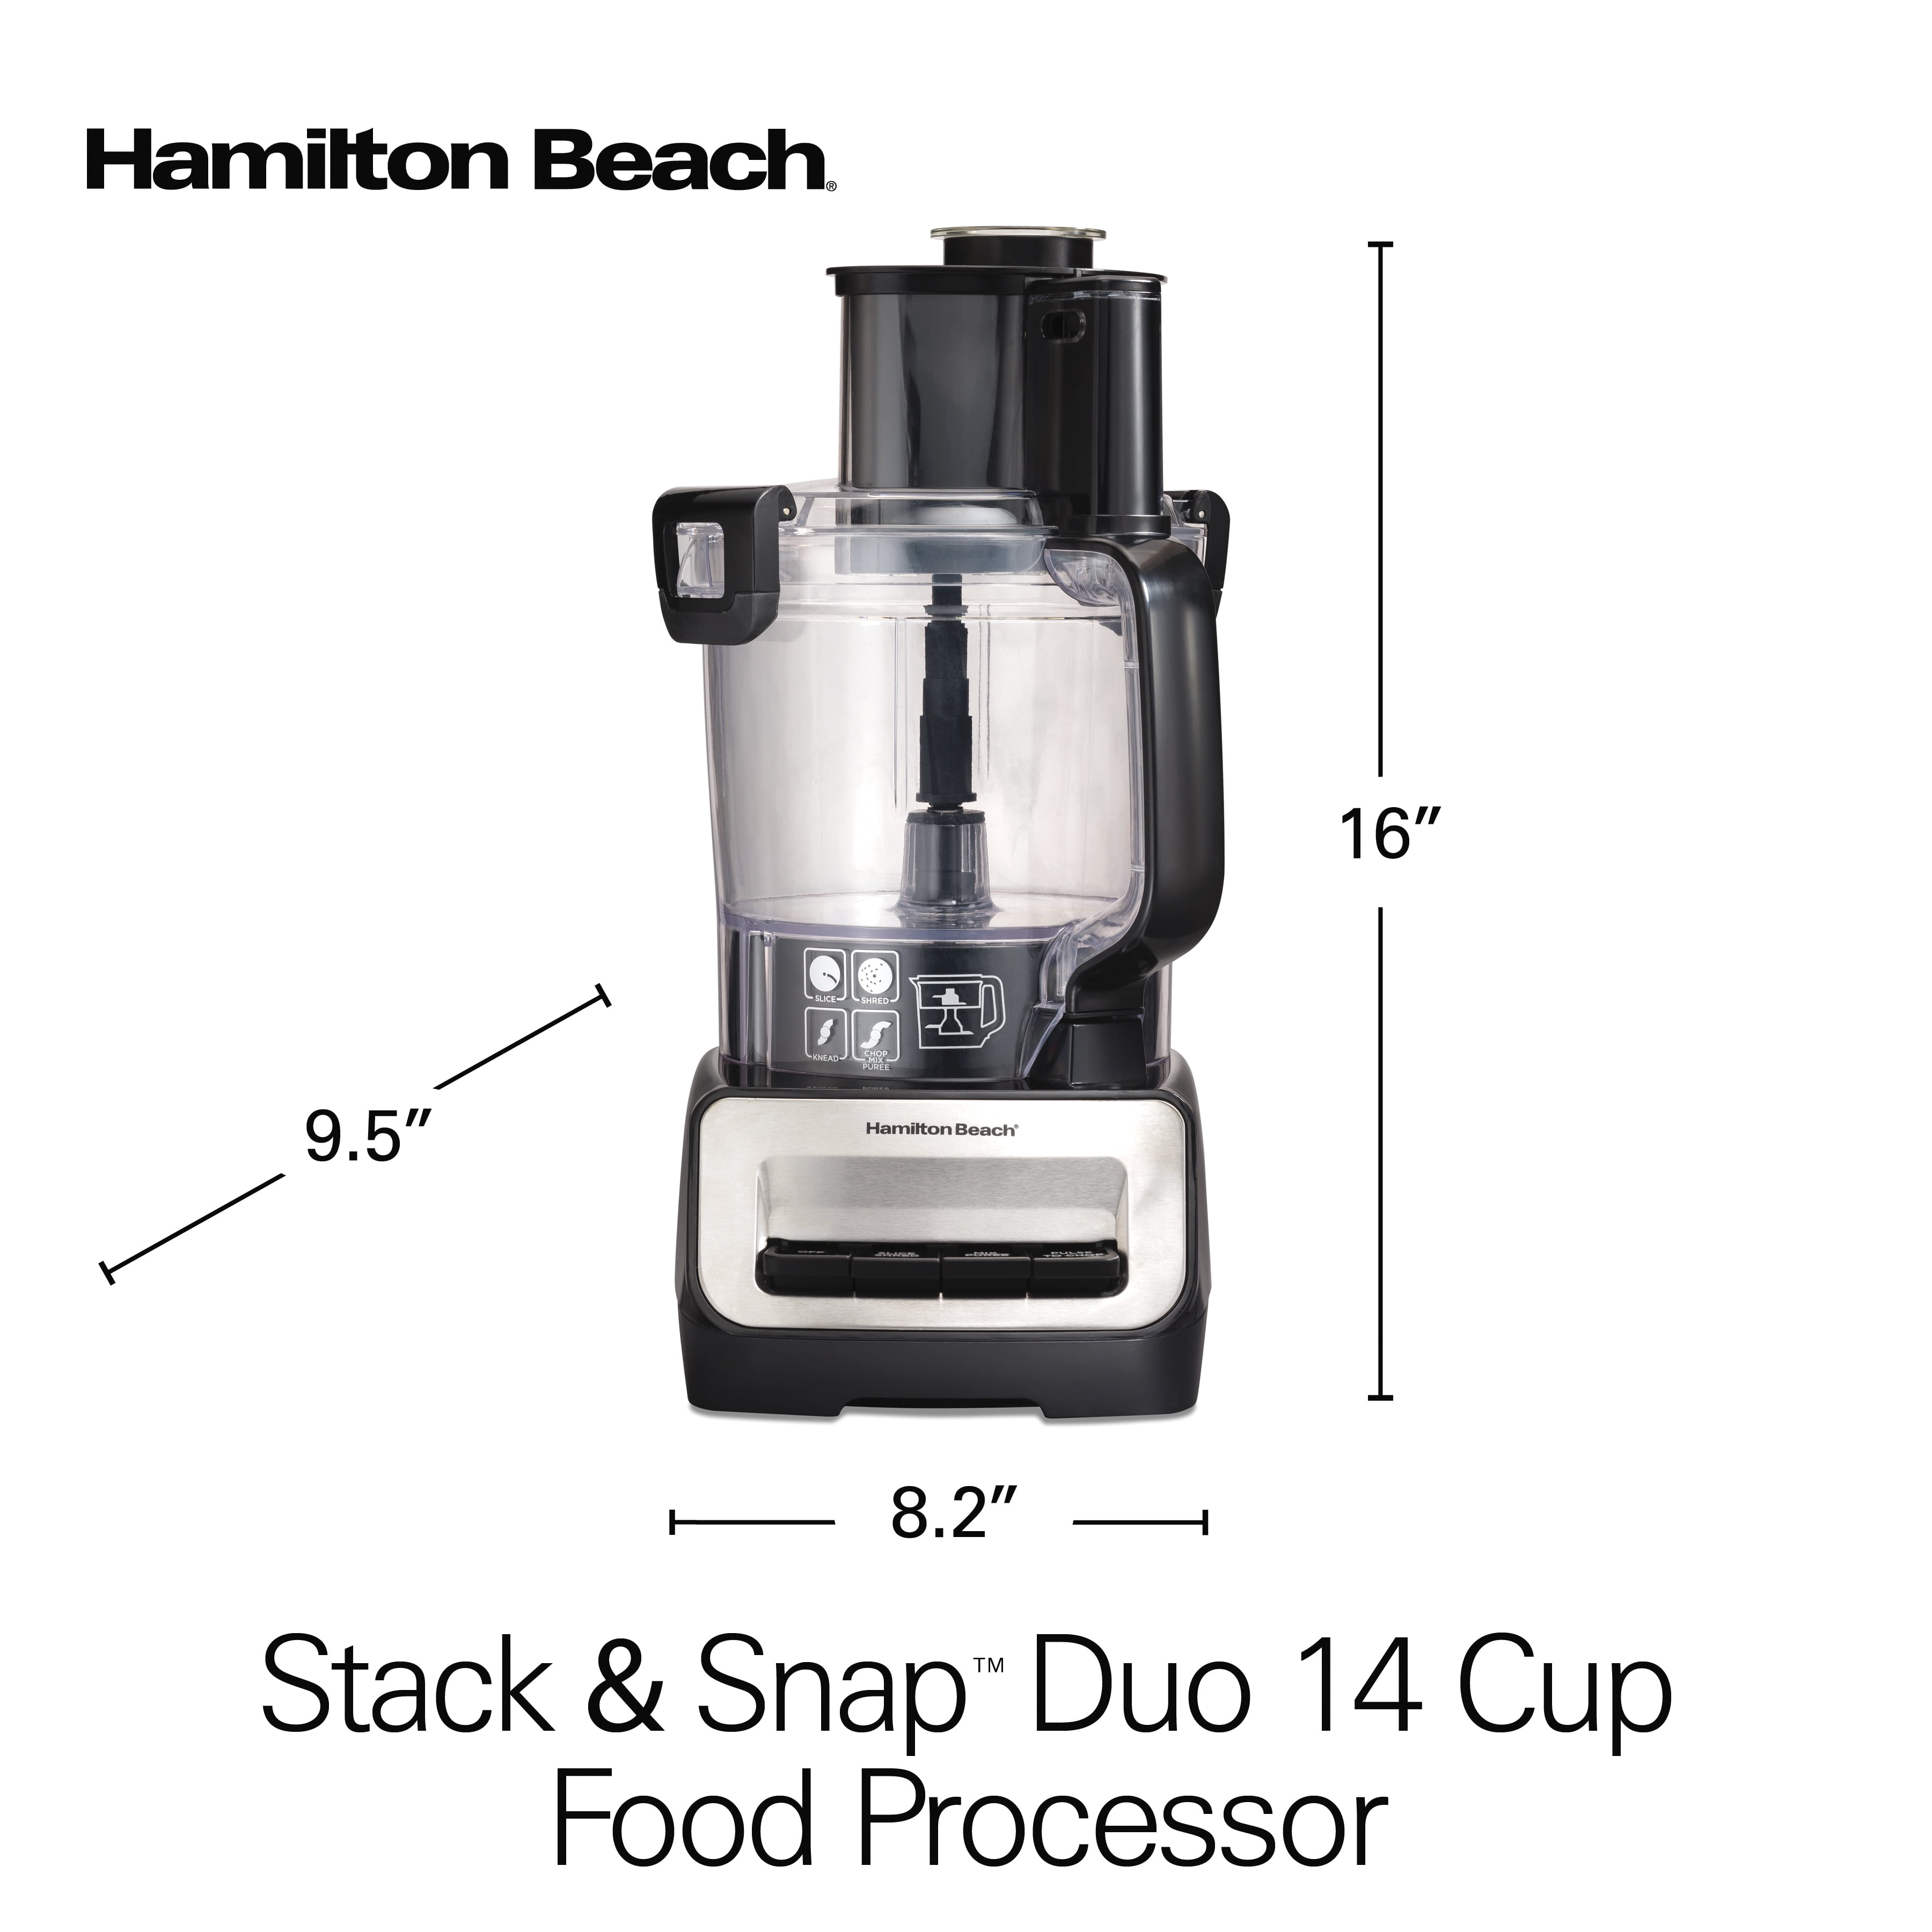 Hamilton Beach®Stack & Snap Duo Food Processor 14 Cup Capacity & Reviews